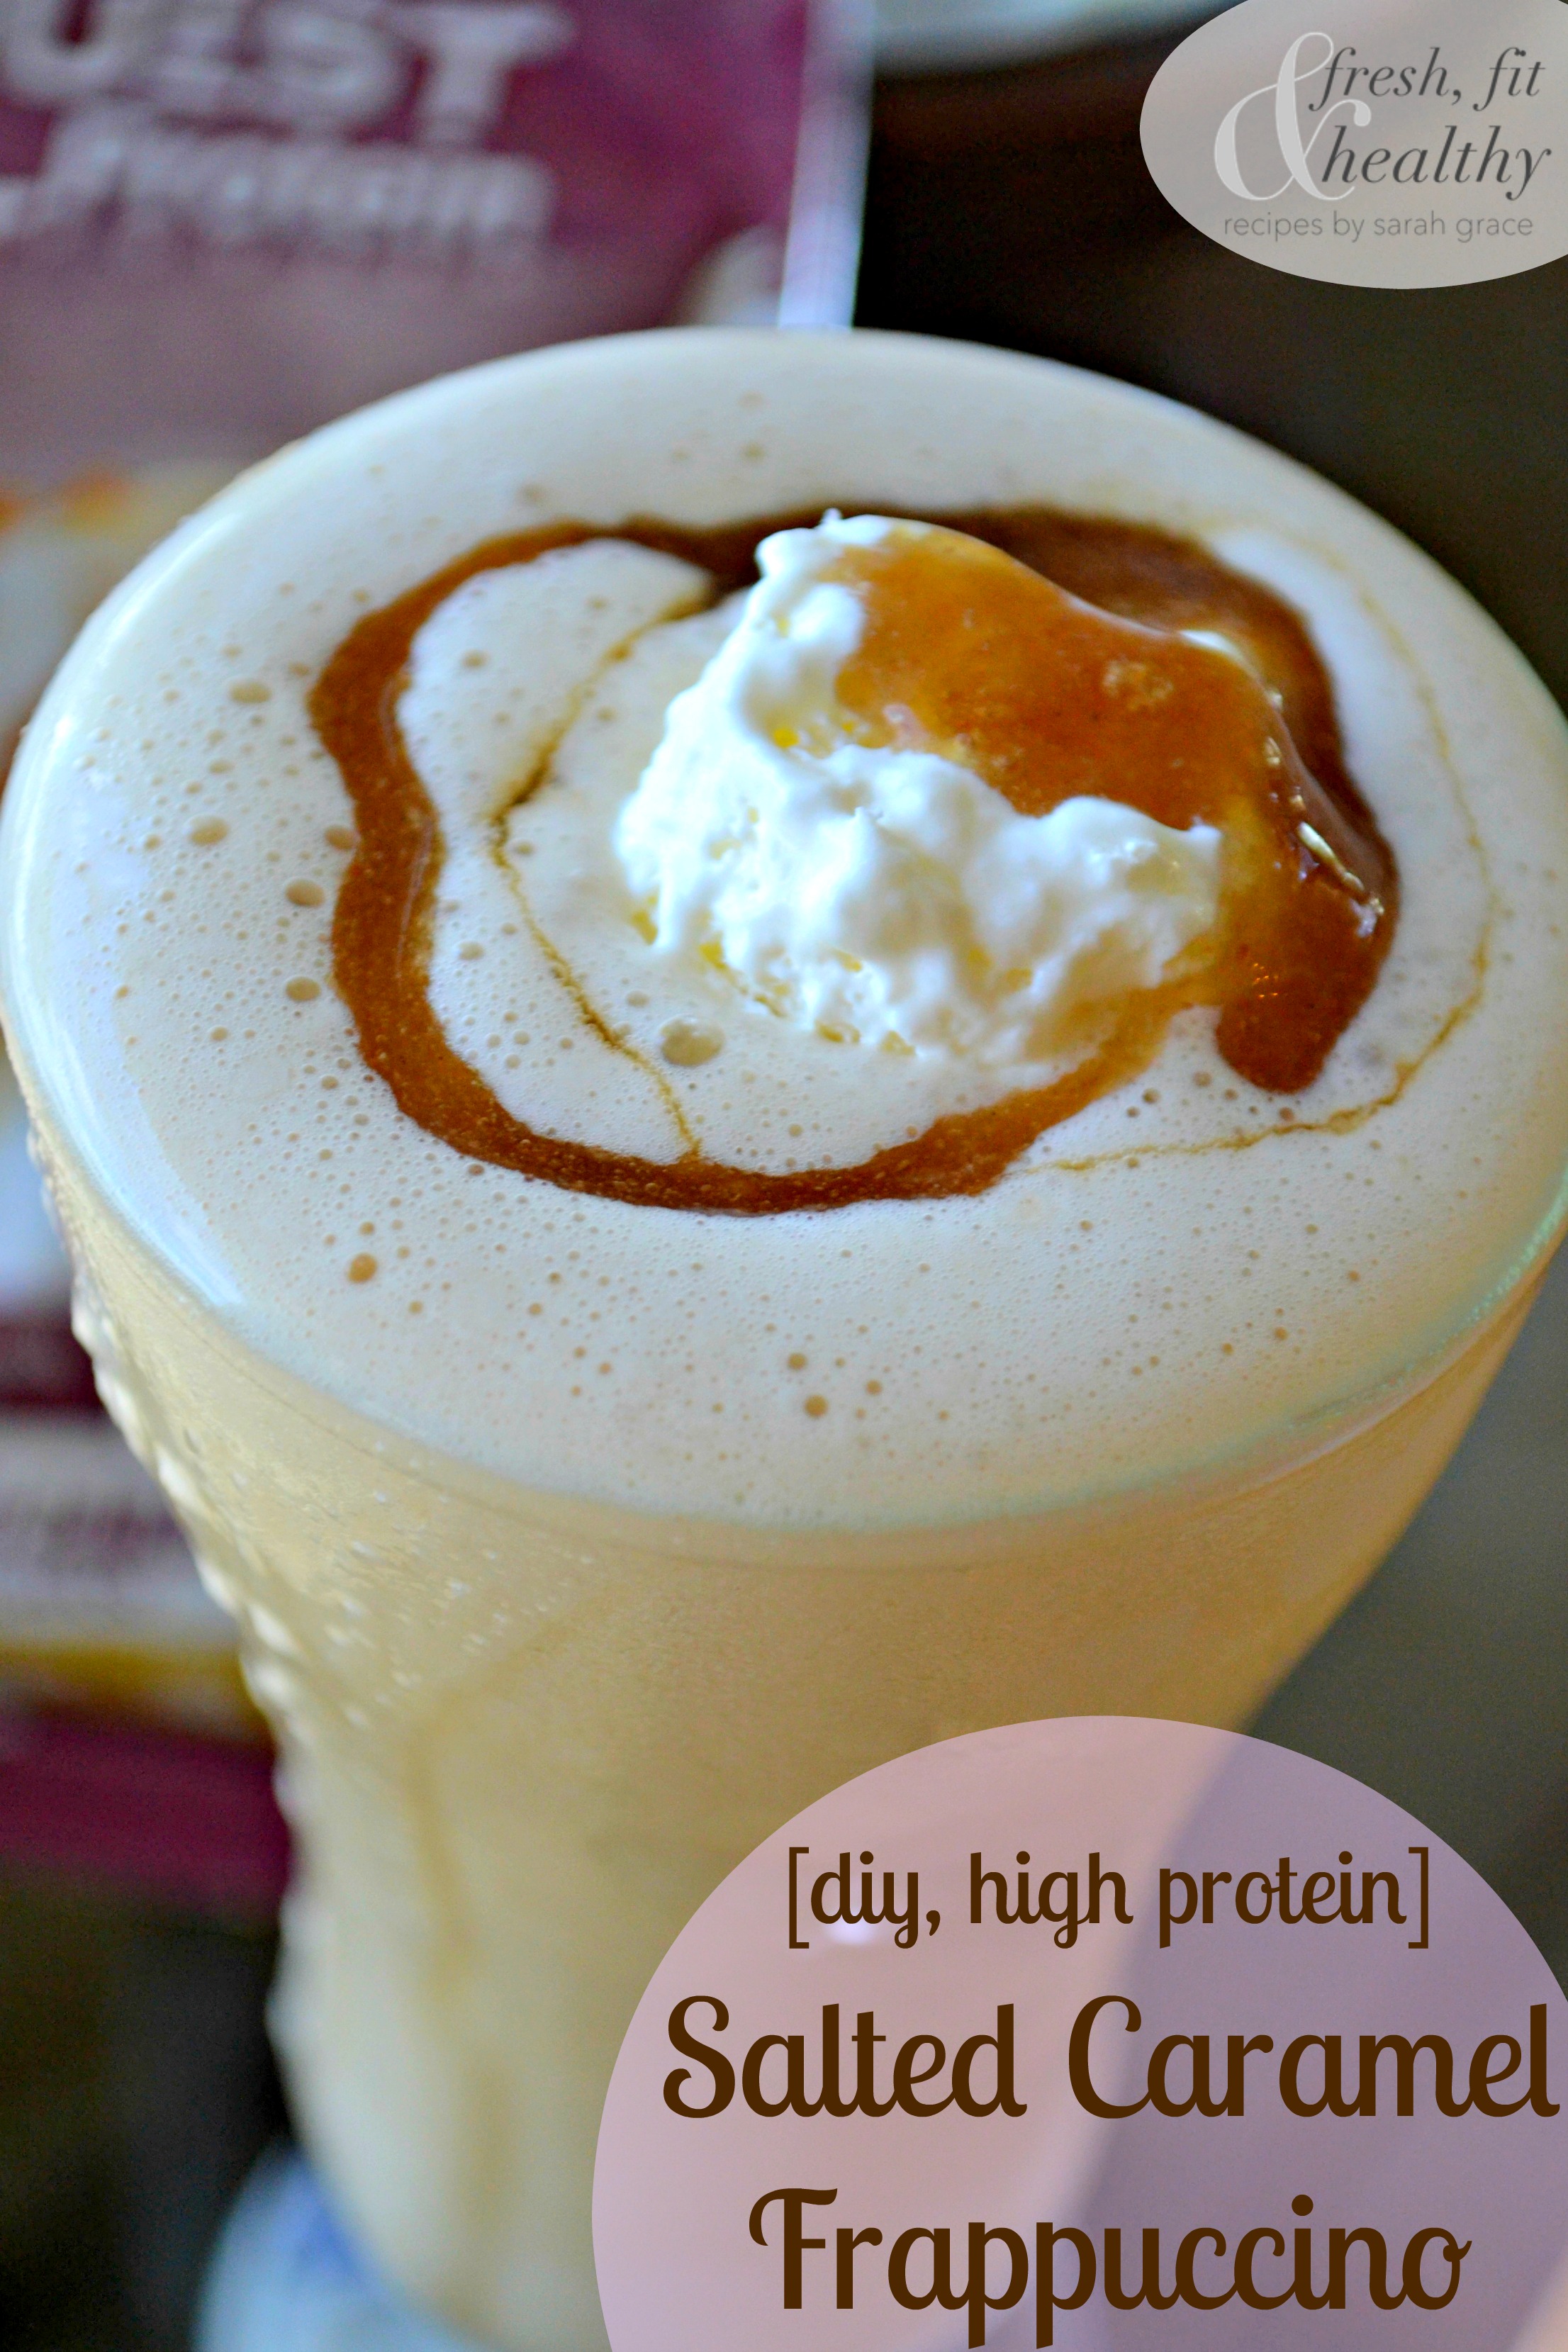 [diy, high protein] Starbucks Salted Caramel Frappuccino - Fresh Fit N